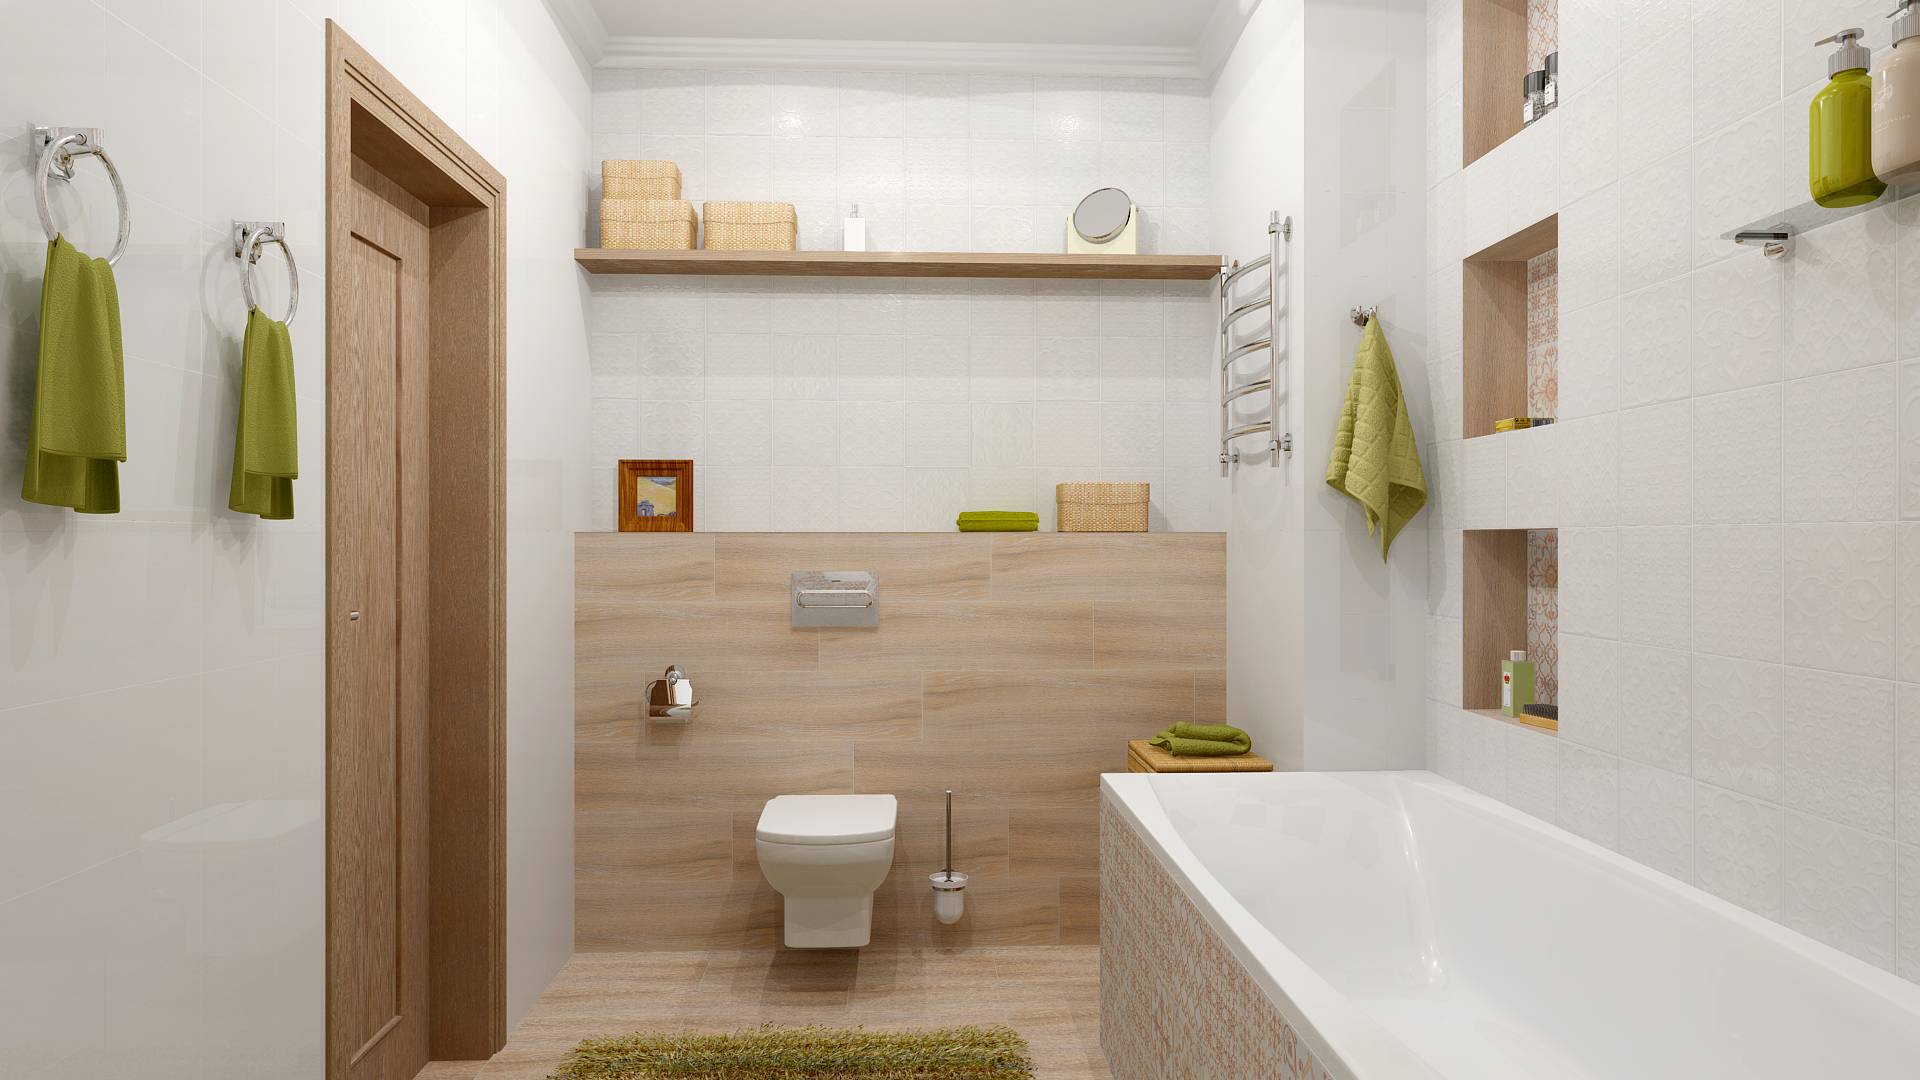 Плитка для туалета - 140 фото новинок дизайна и красивого сочетания плитки по цвету